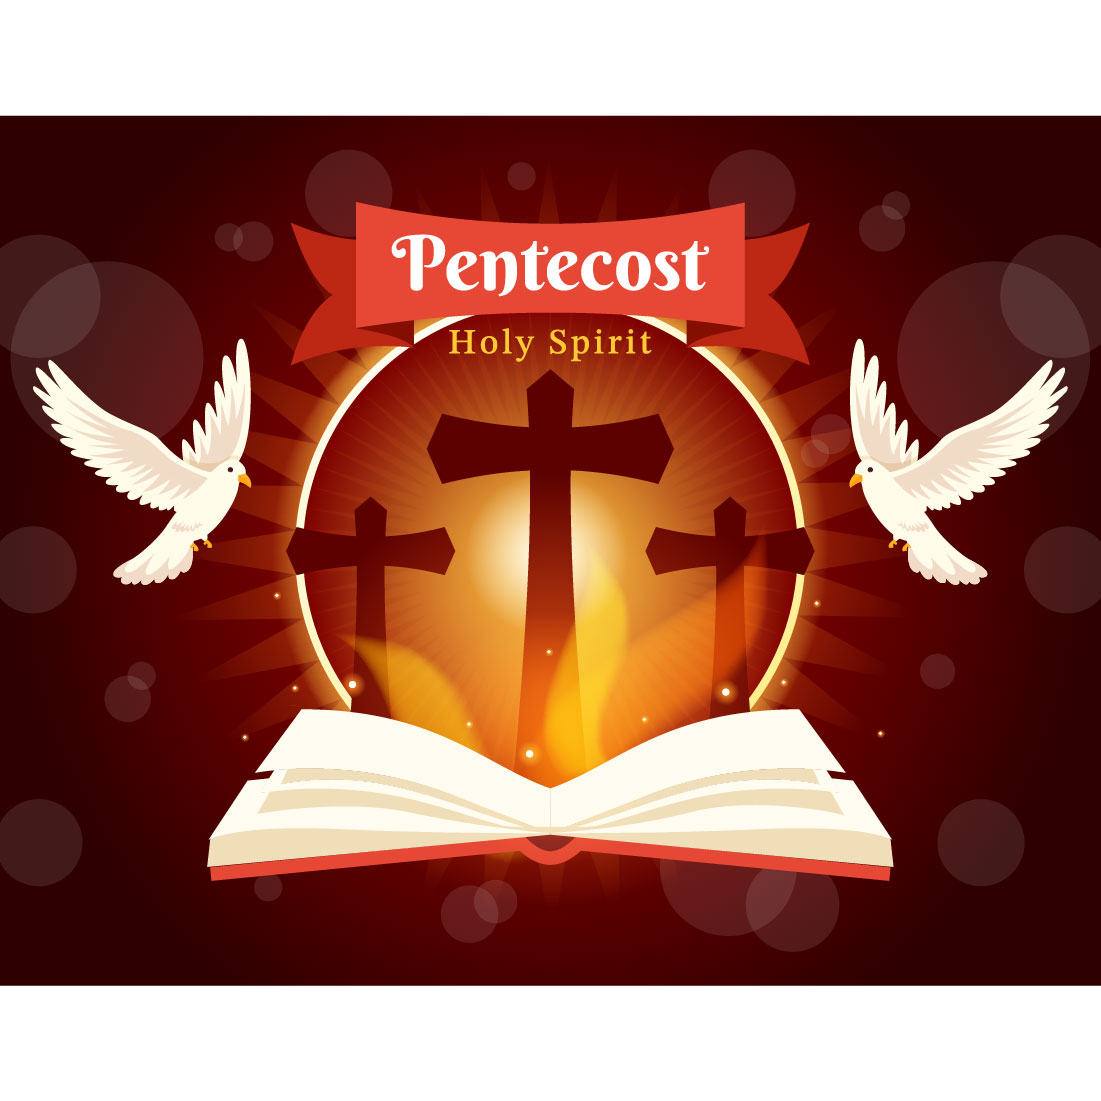 12 Pentecost Illustration cover image.